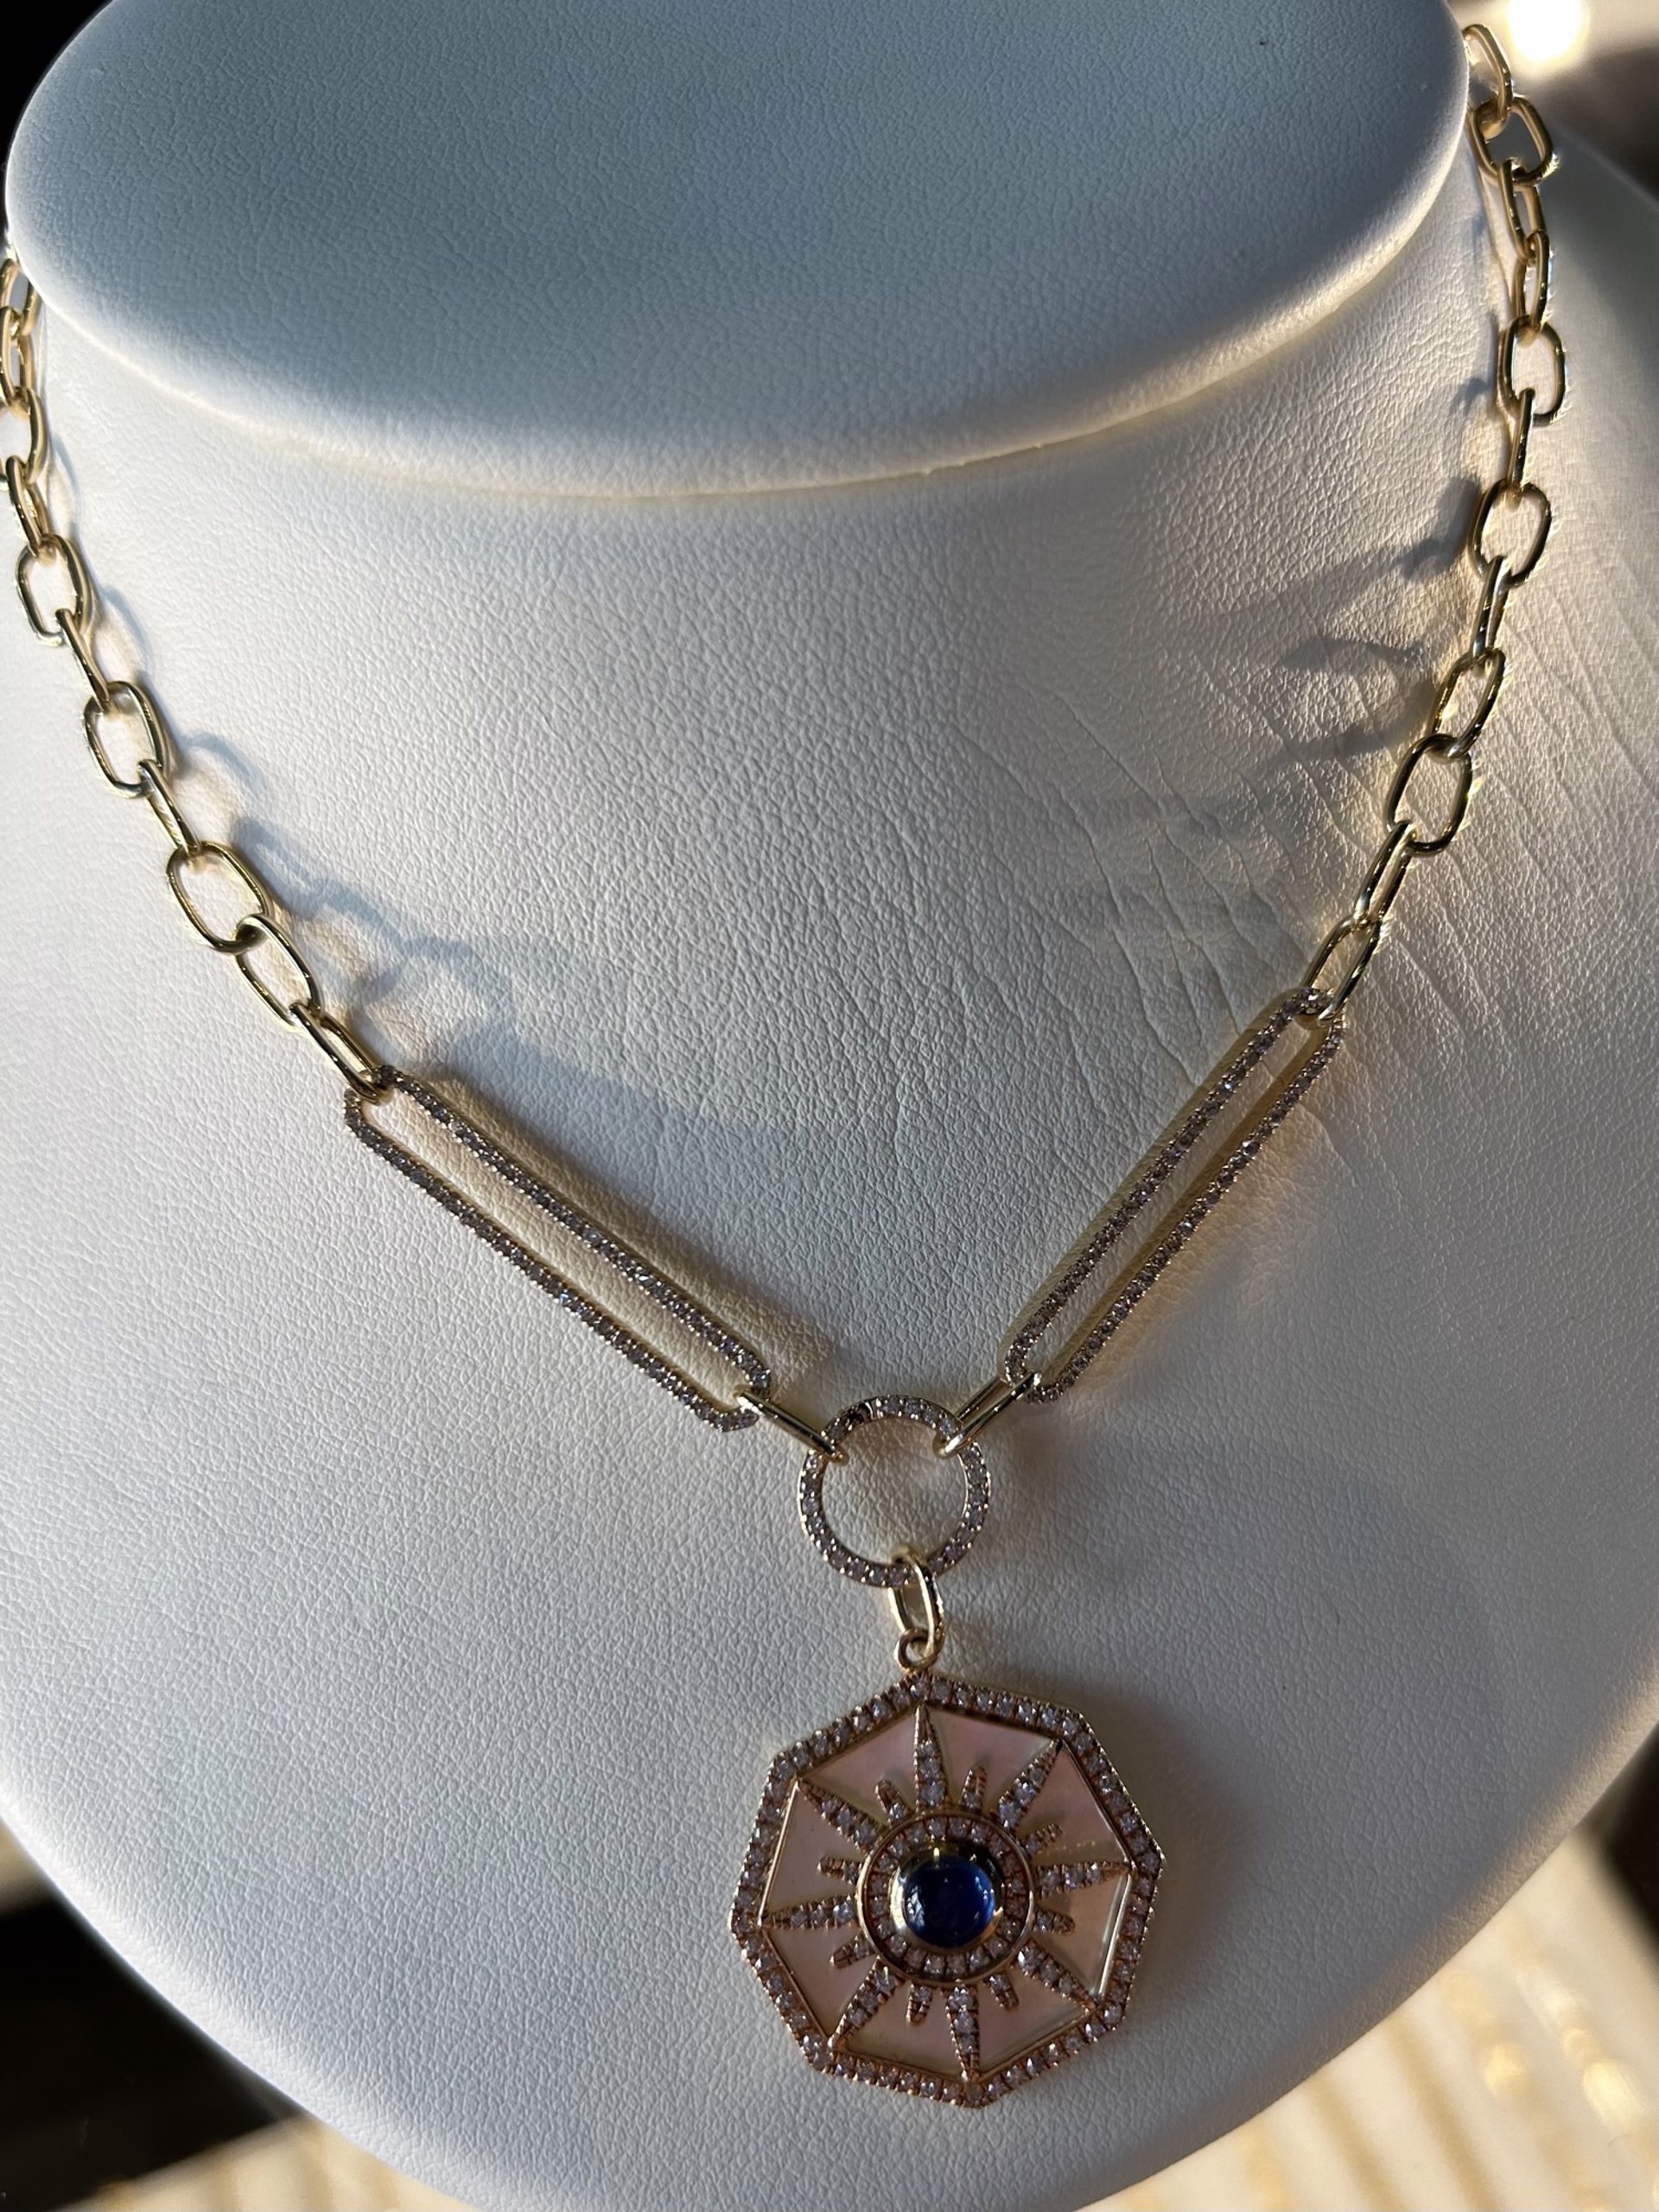 KB-P1 14k Gold diamond, sapphire, and pearl circle pendant by Karen Birchmier